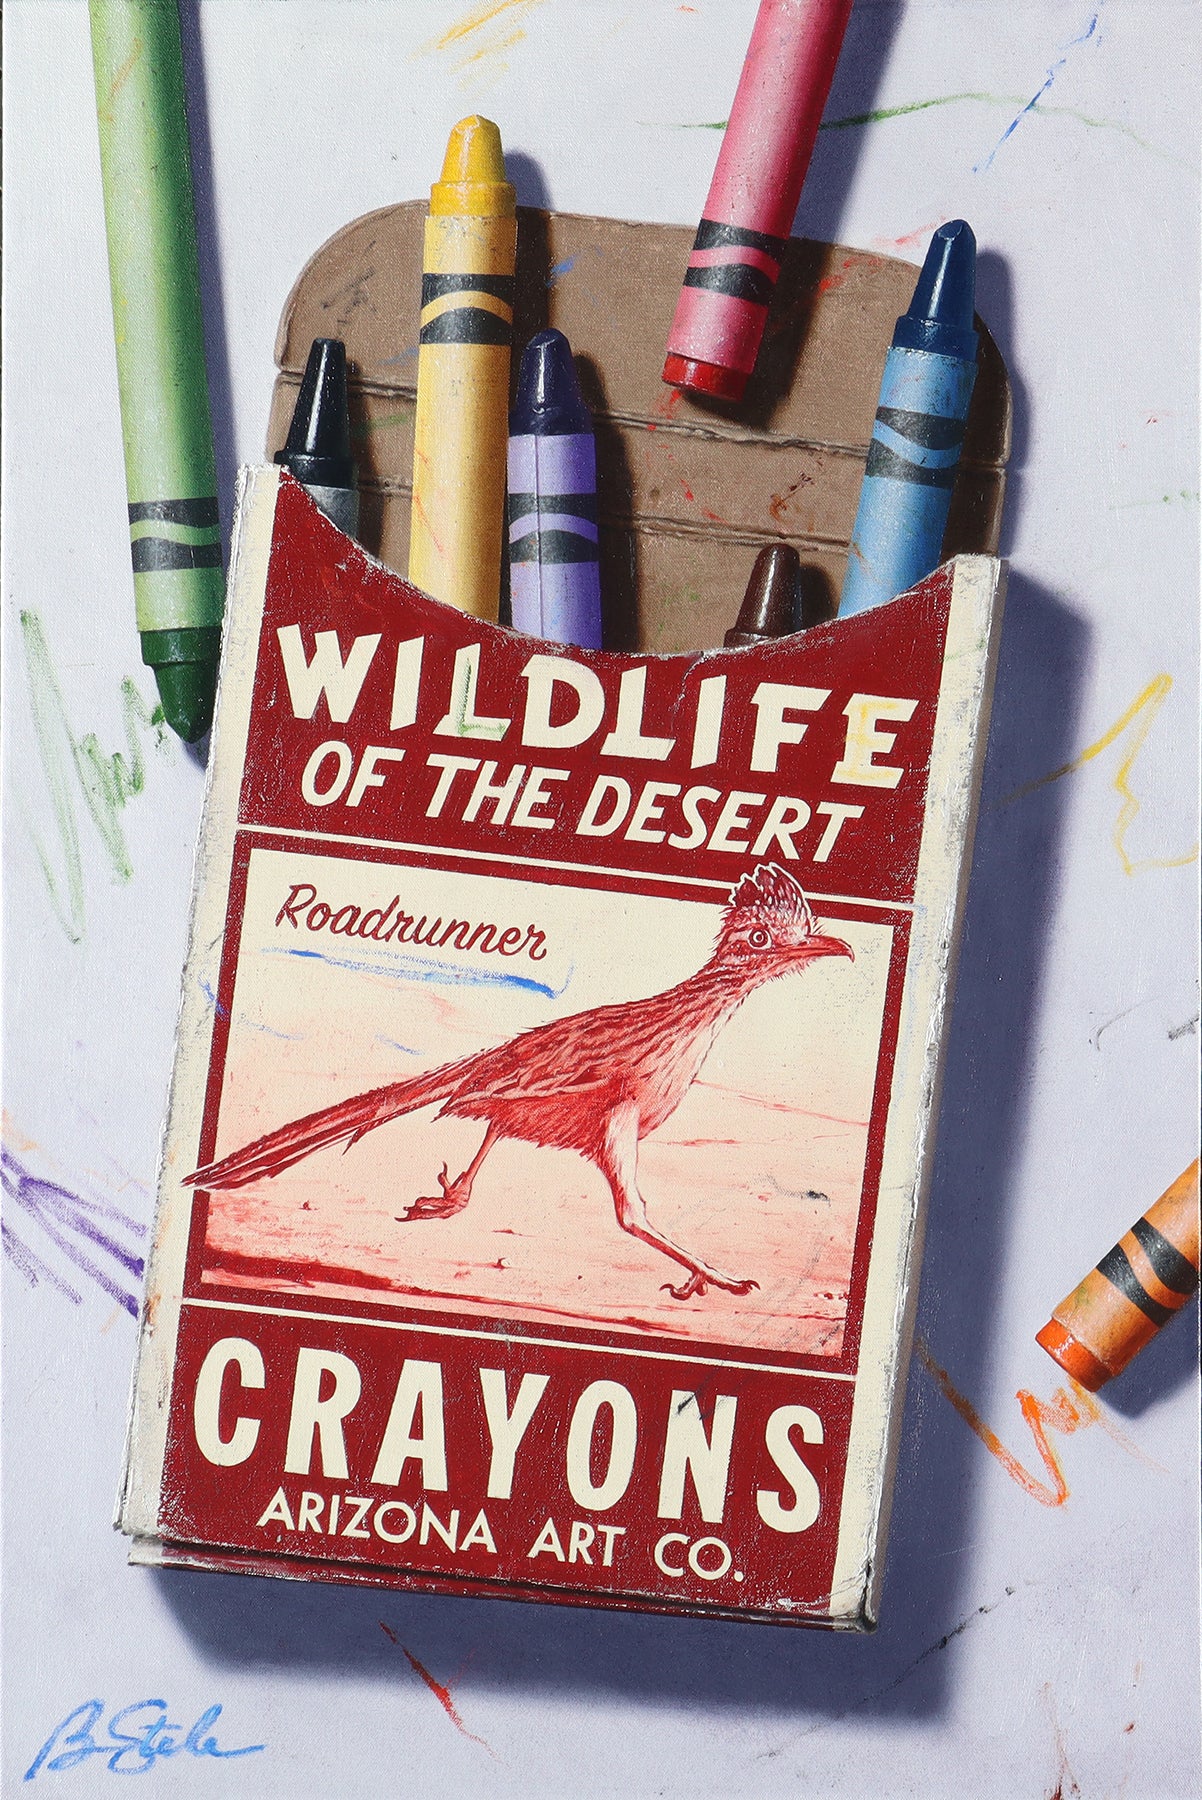 Roadrunner Crayons